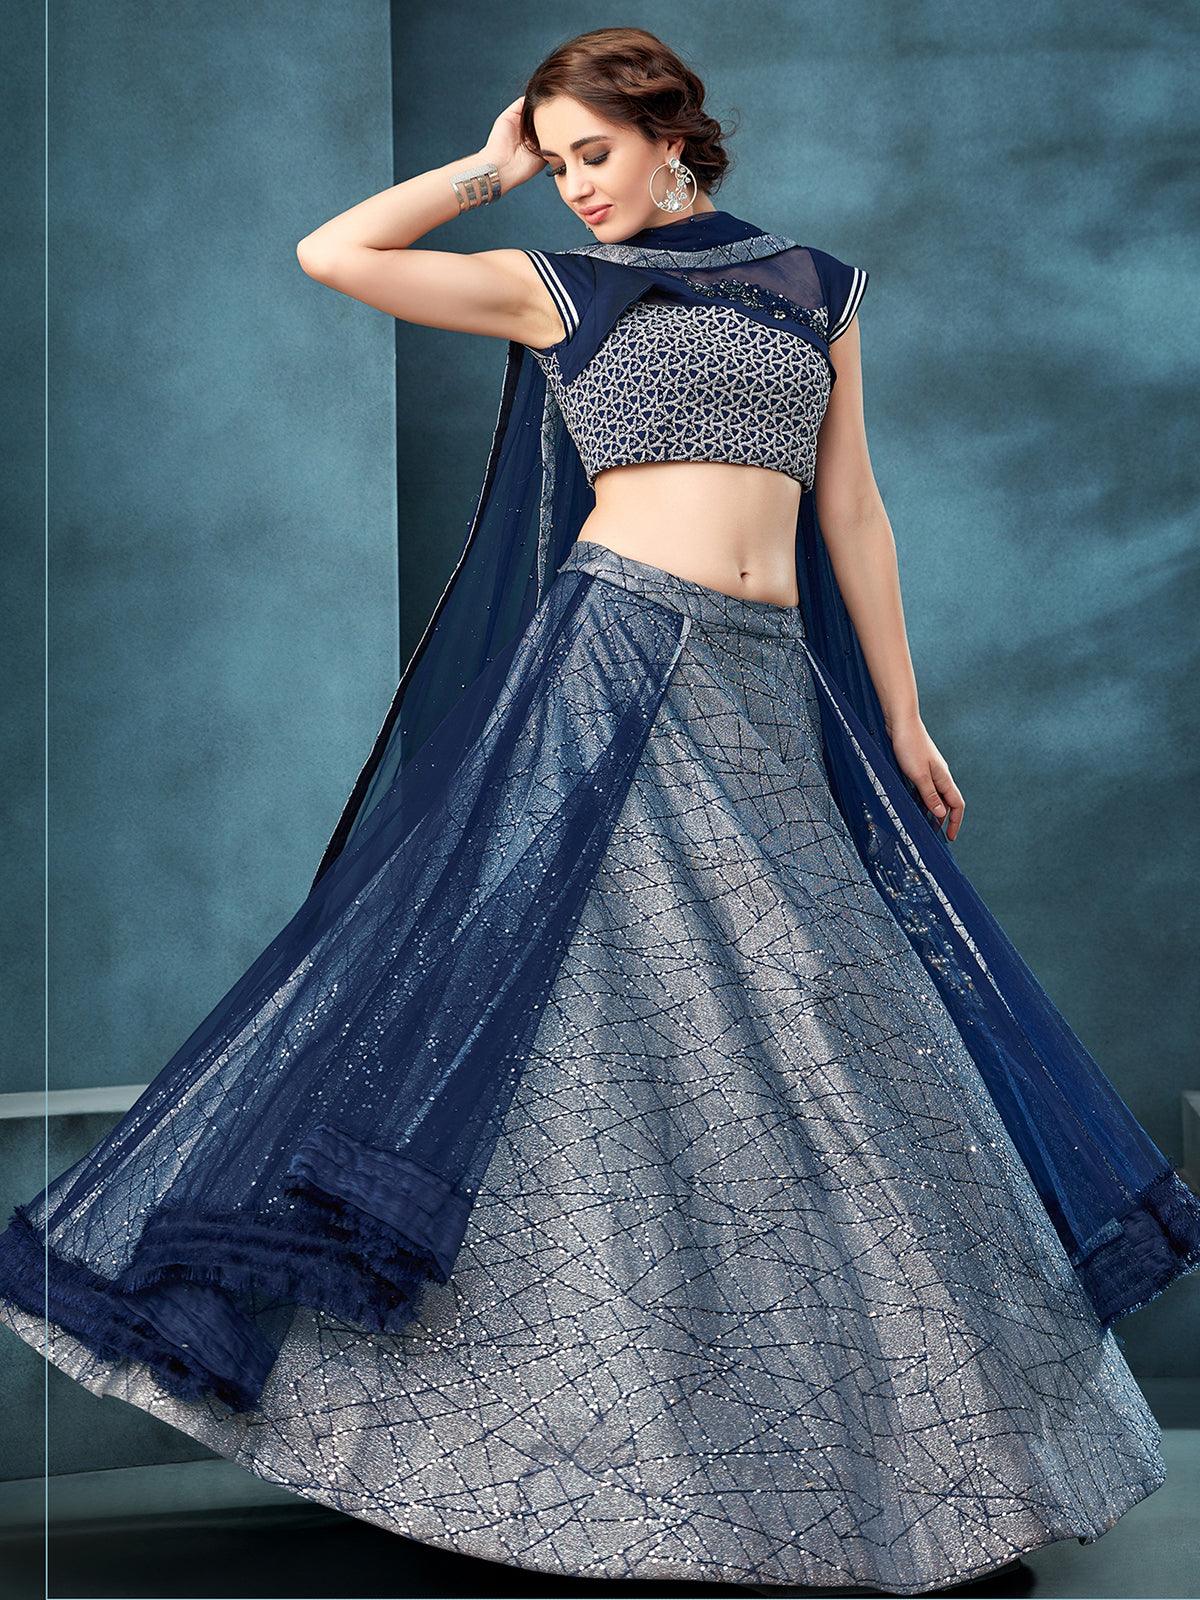 Women's Silver Value Addition Fabric Net Designer Lehenga Choli - Odette